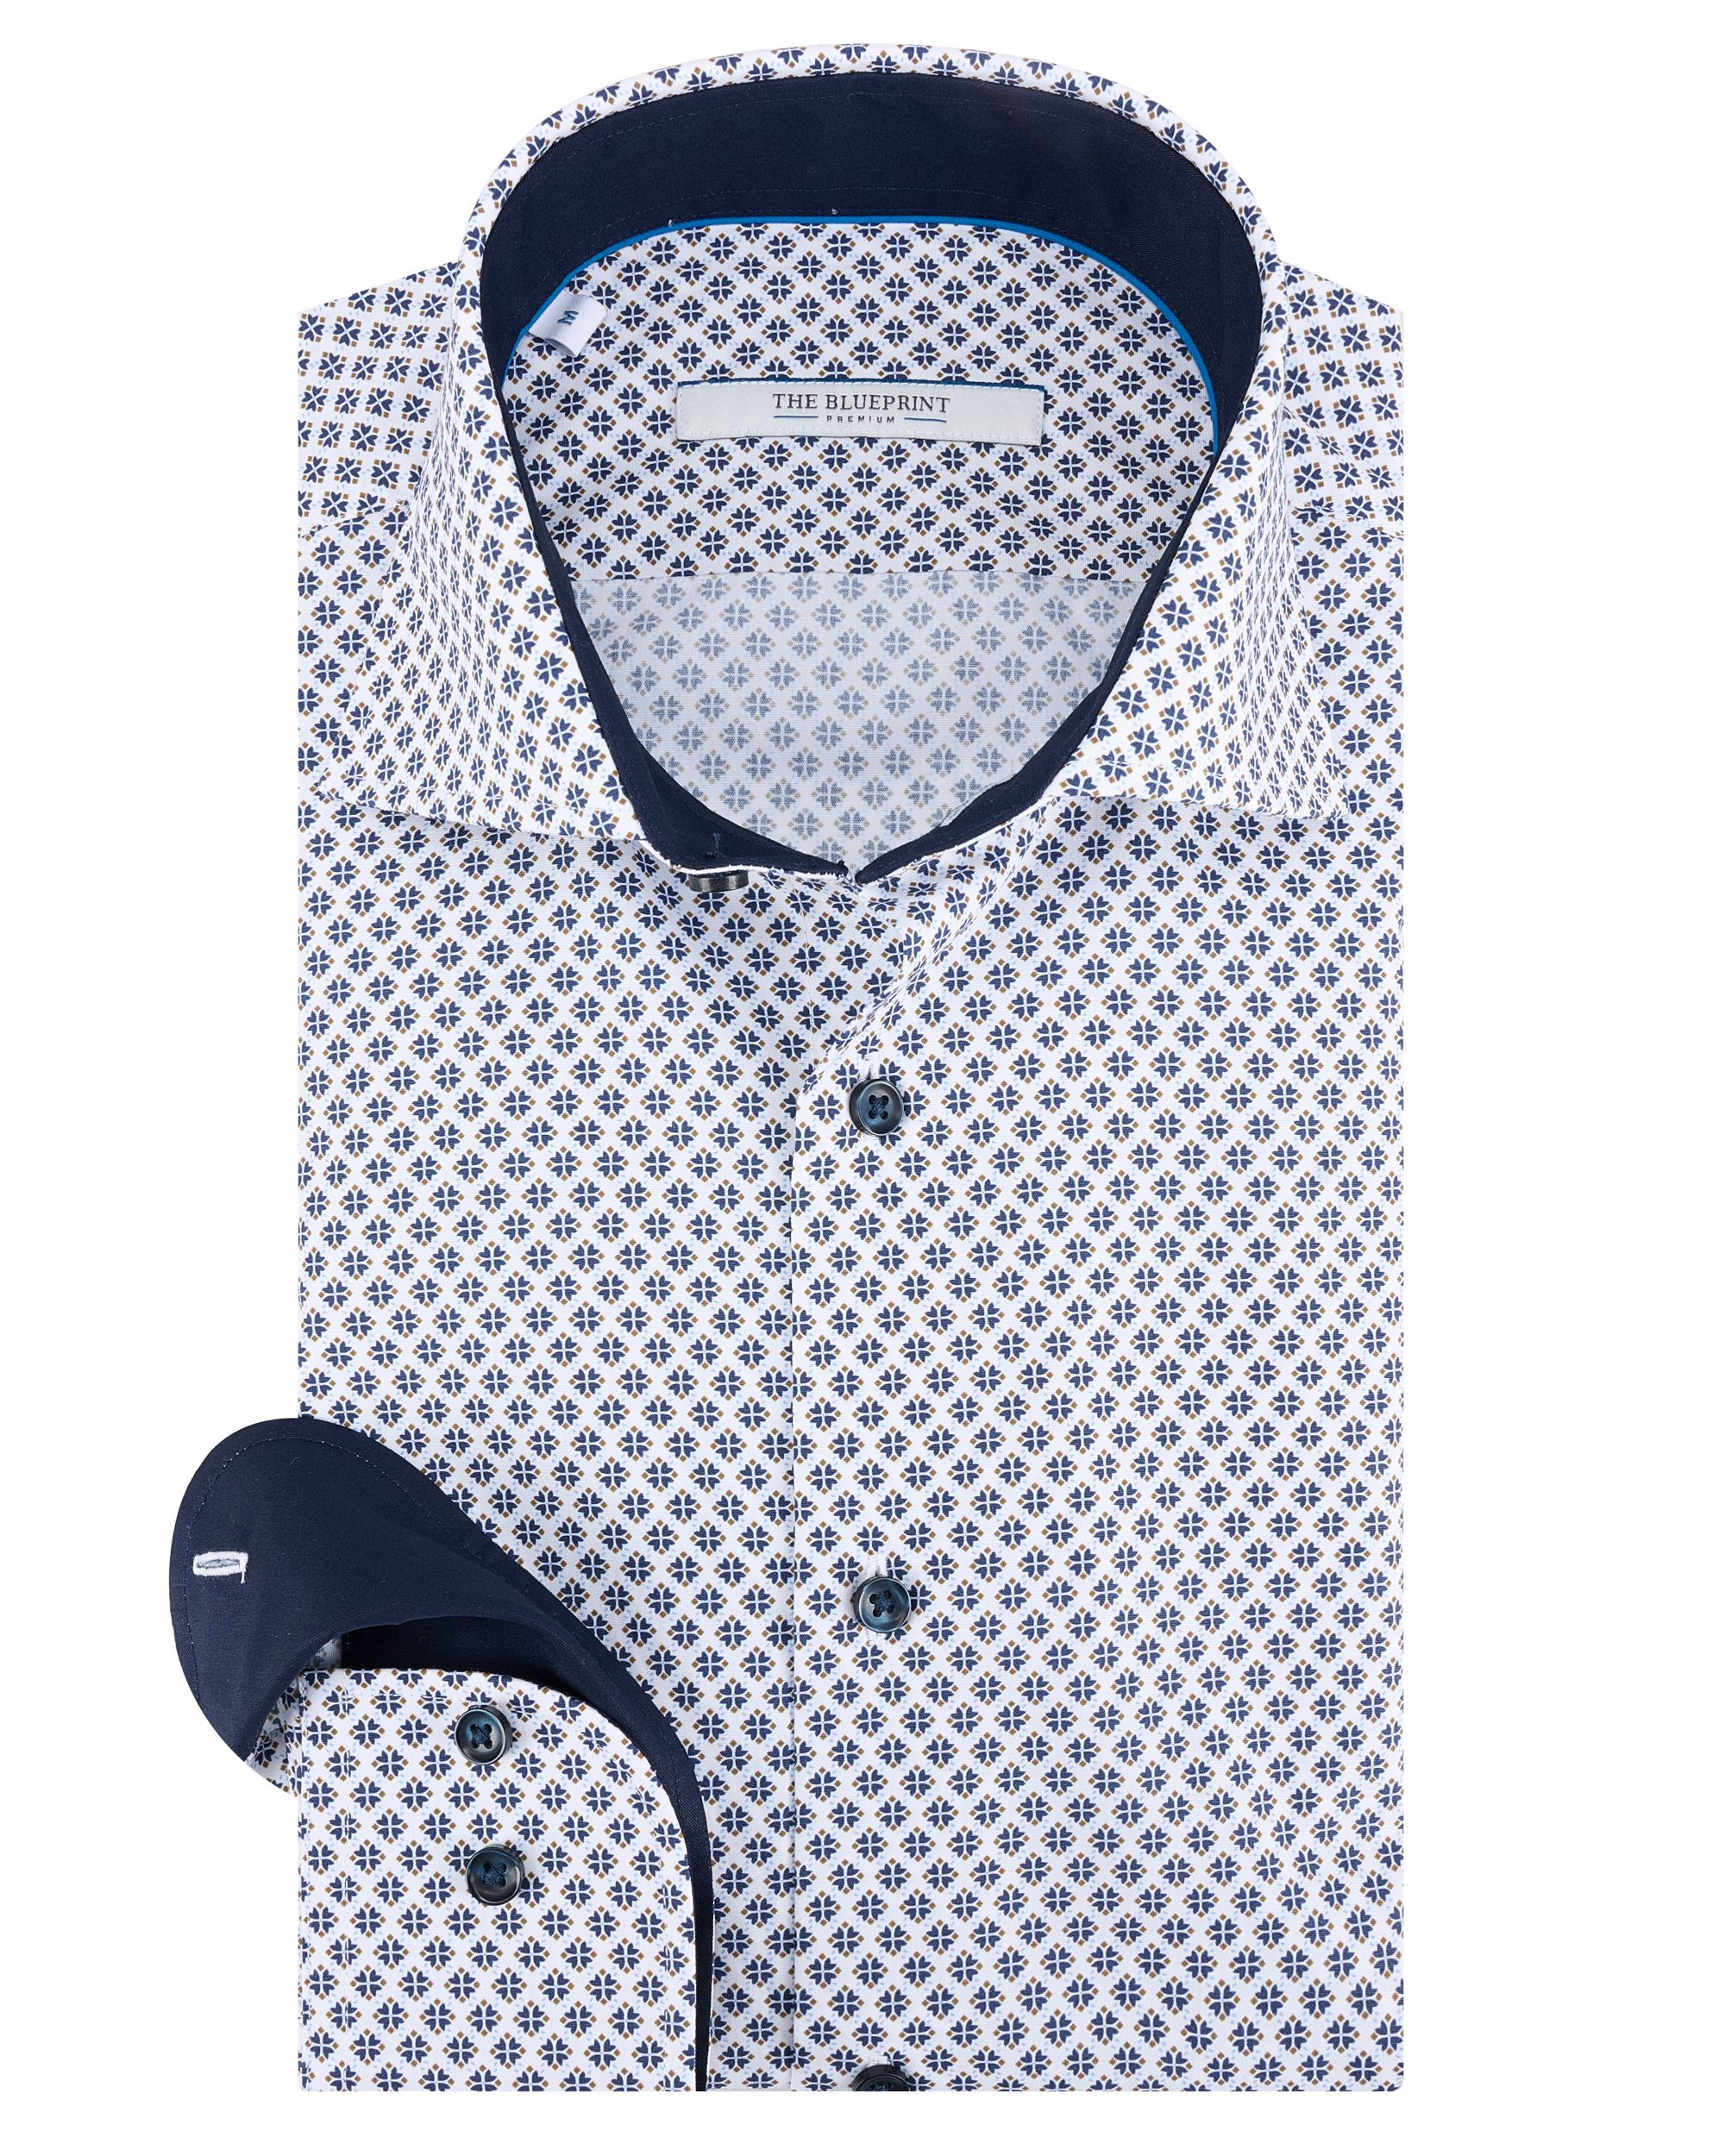 The BLUEPRINT Premium -Trendy Overhemd LM Wit dessin 092064-001-L